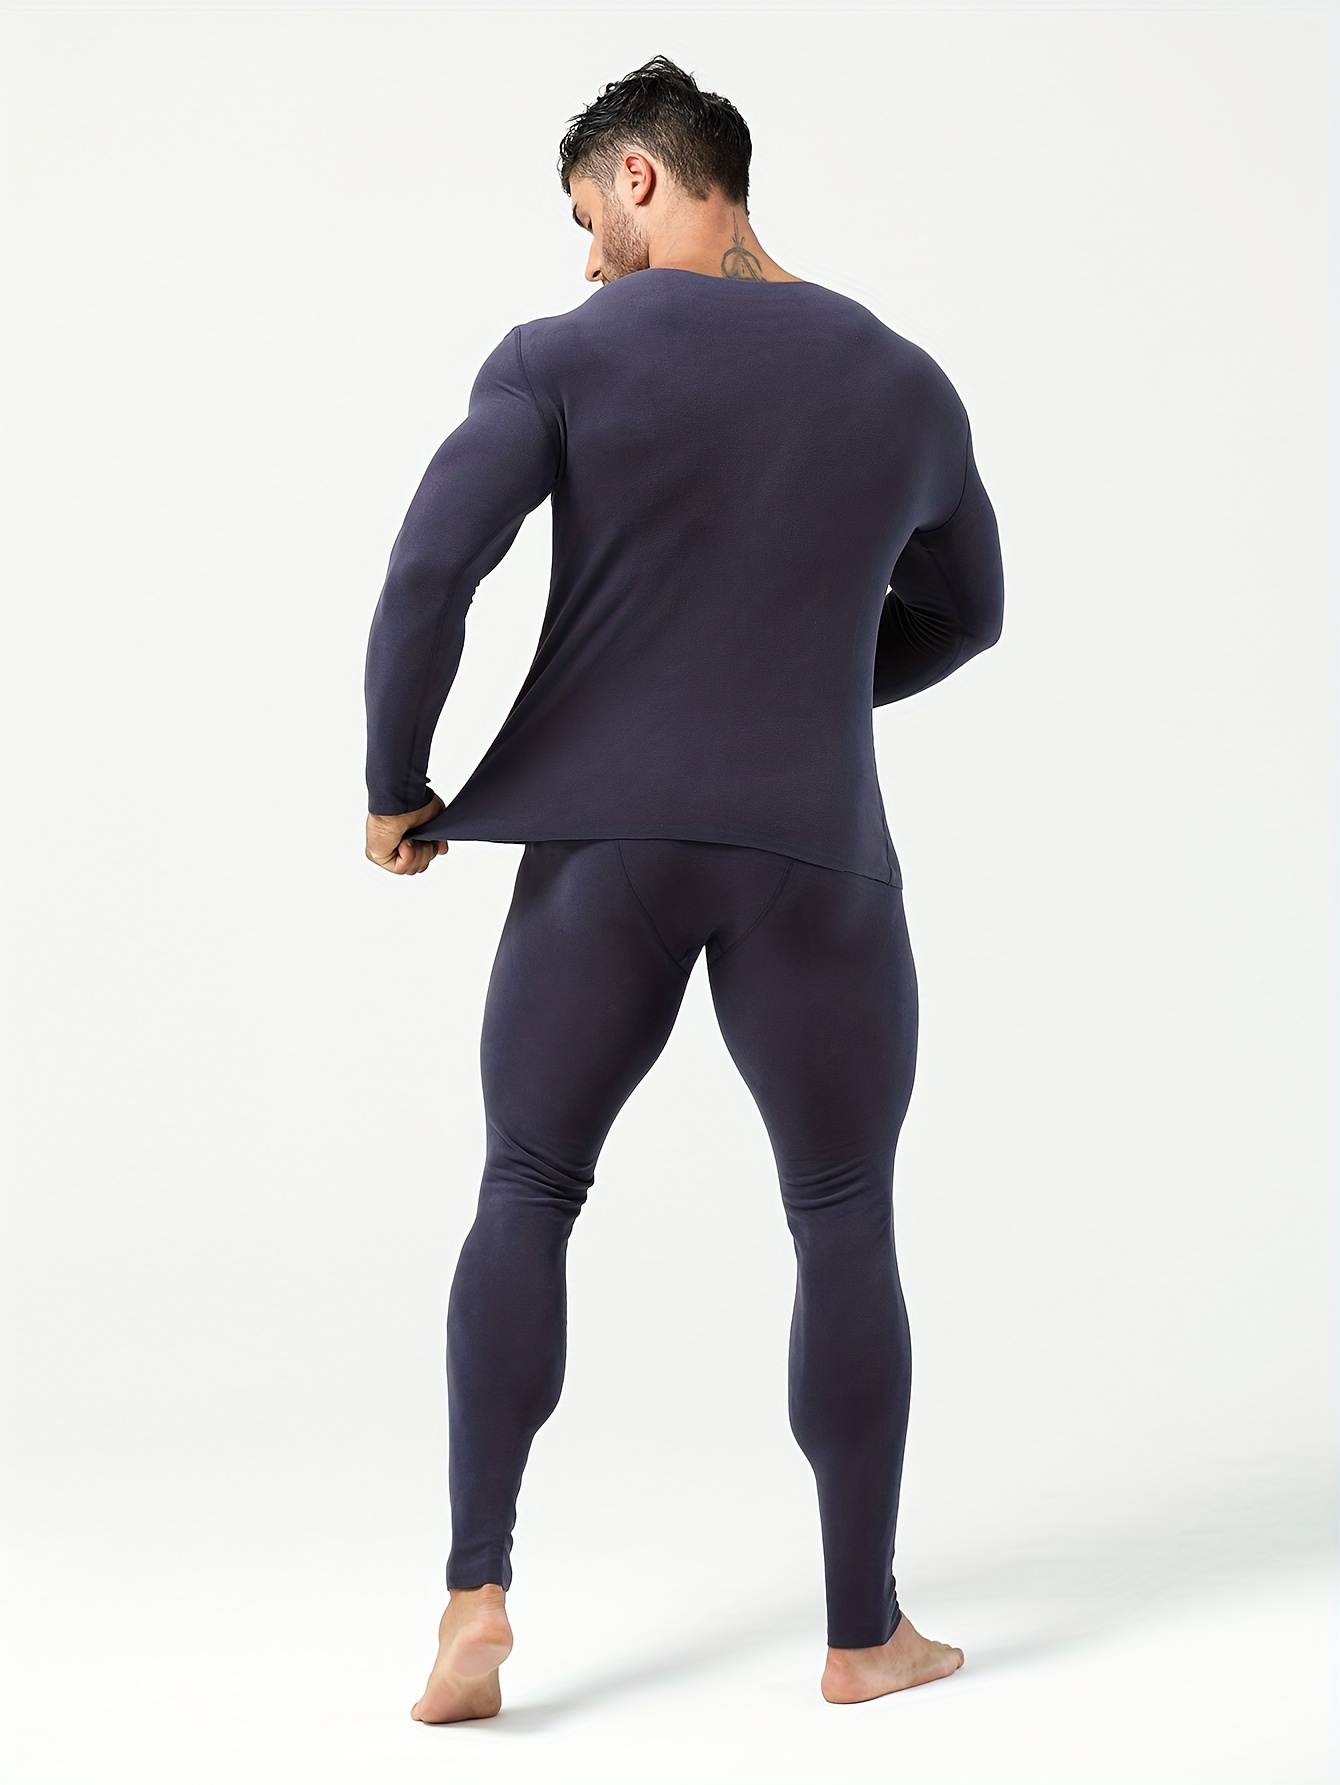 Men's Thermal Underwear, Long John Base Layer Lined Top Free Shipping